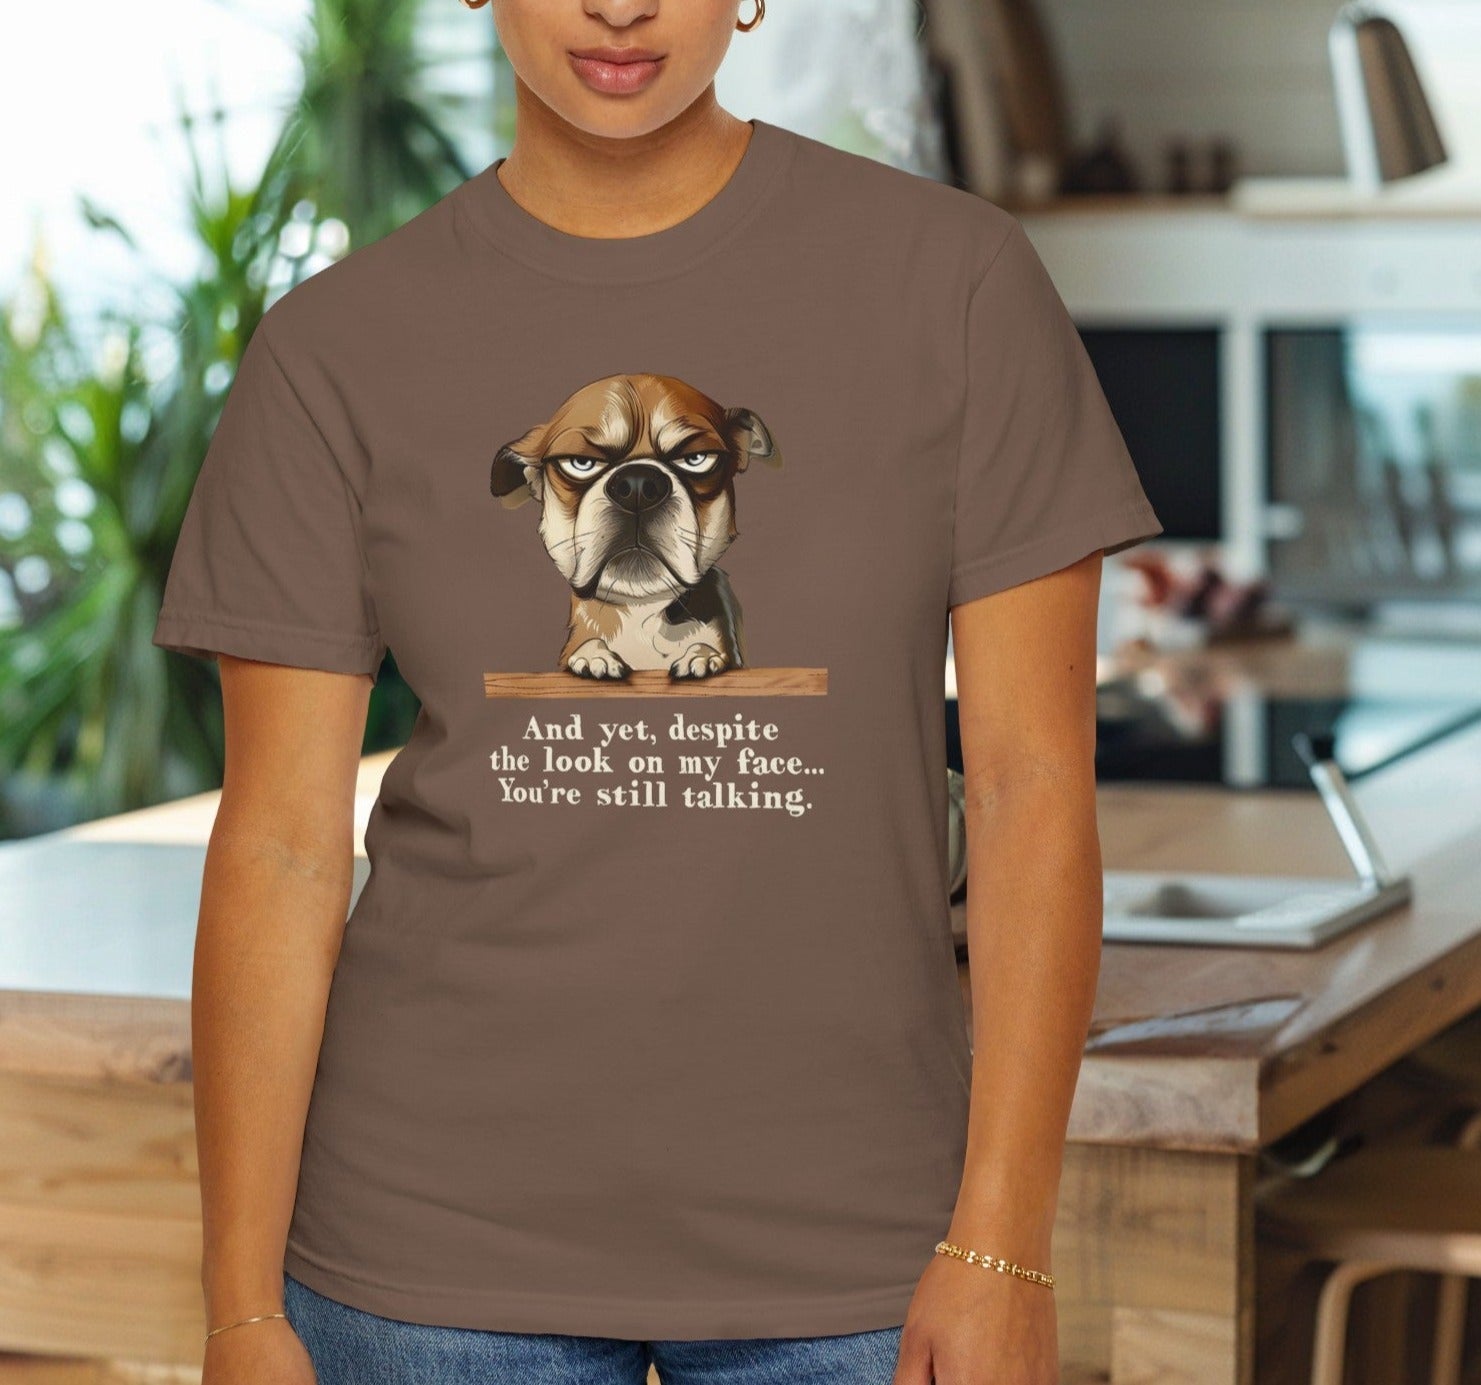 Funny Cute Dog T-shirt, Sarcastic Cartoon Dog Graphic Print, Unique Art for Dog Lover - FlooredByArt